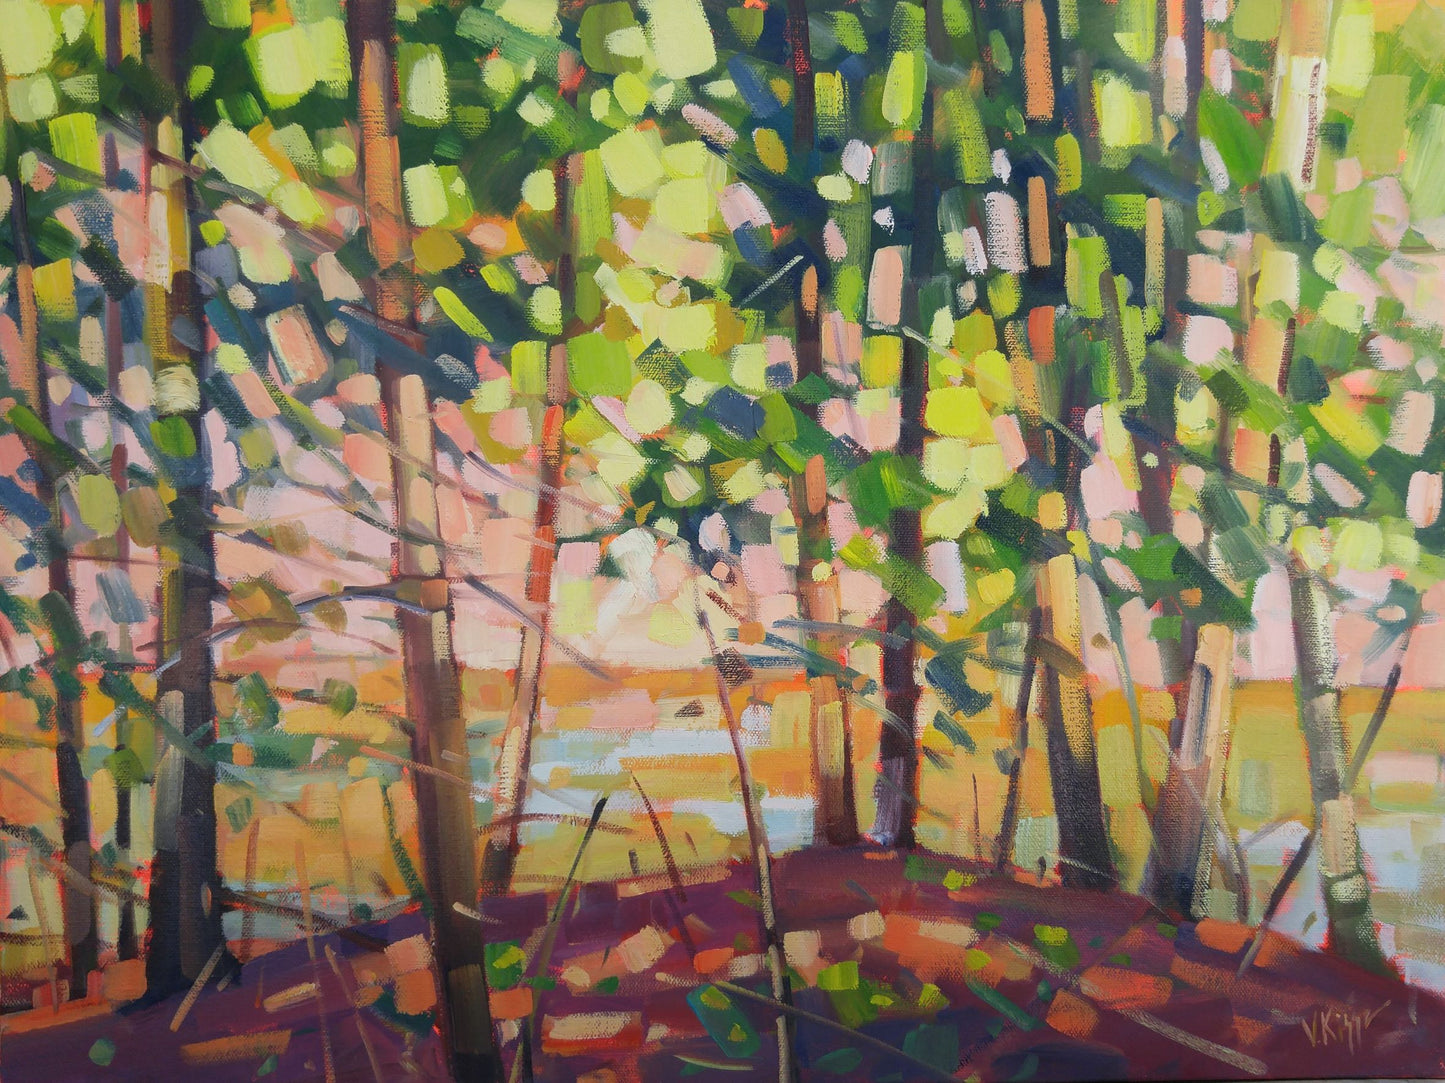 Original oil painting impressionisric canadian landscape Elora Gorge trail by local artist Vera Kisseleva